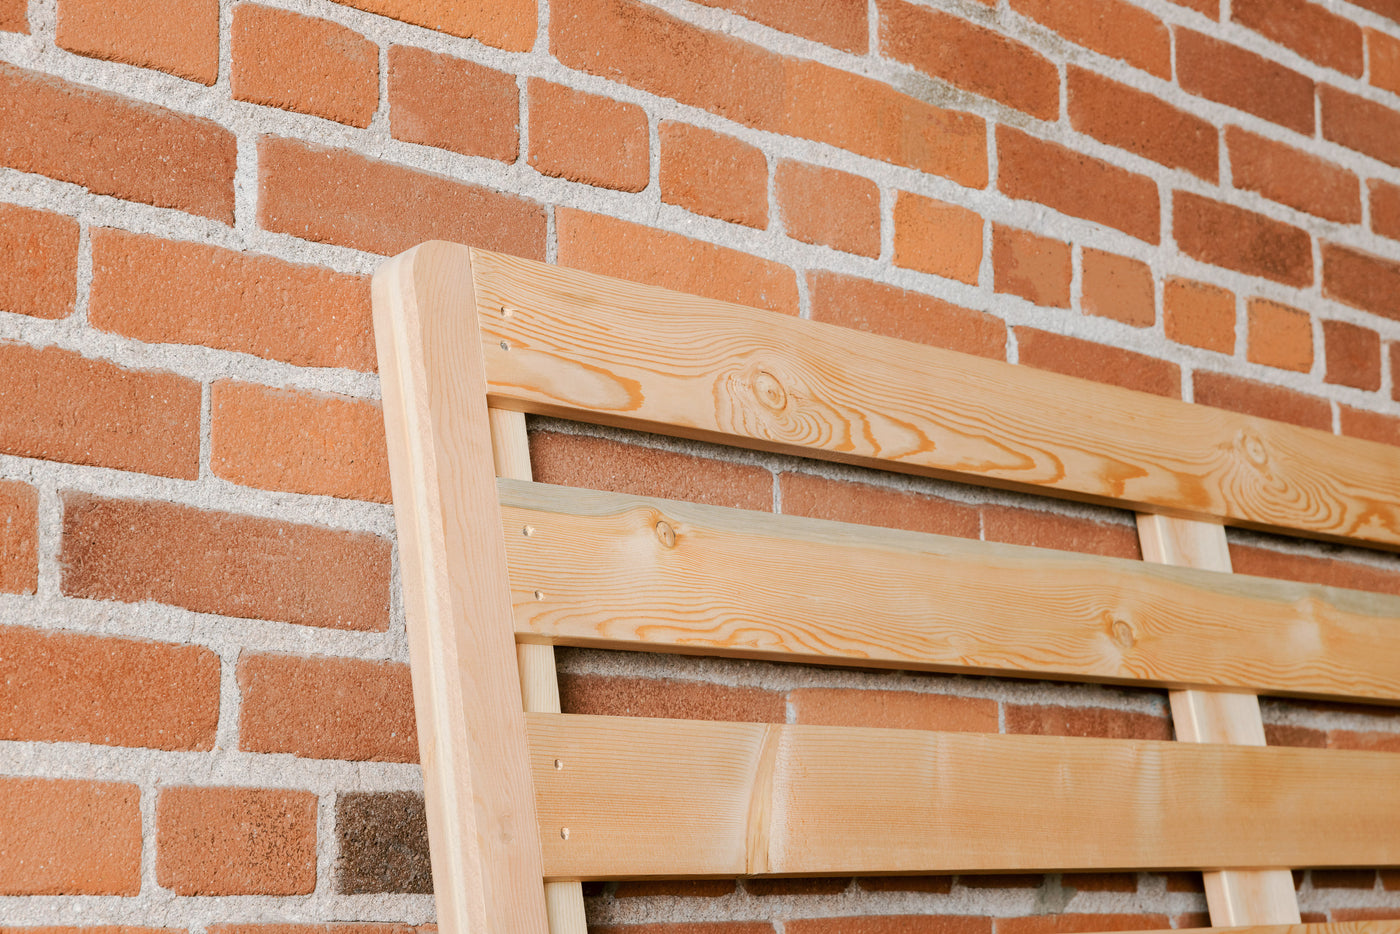 Corner of wooden bunkie board against brick wall